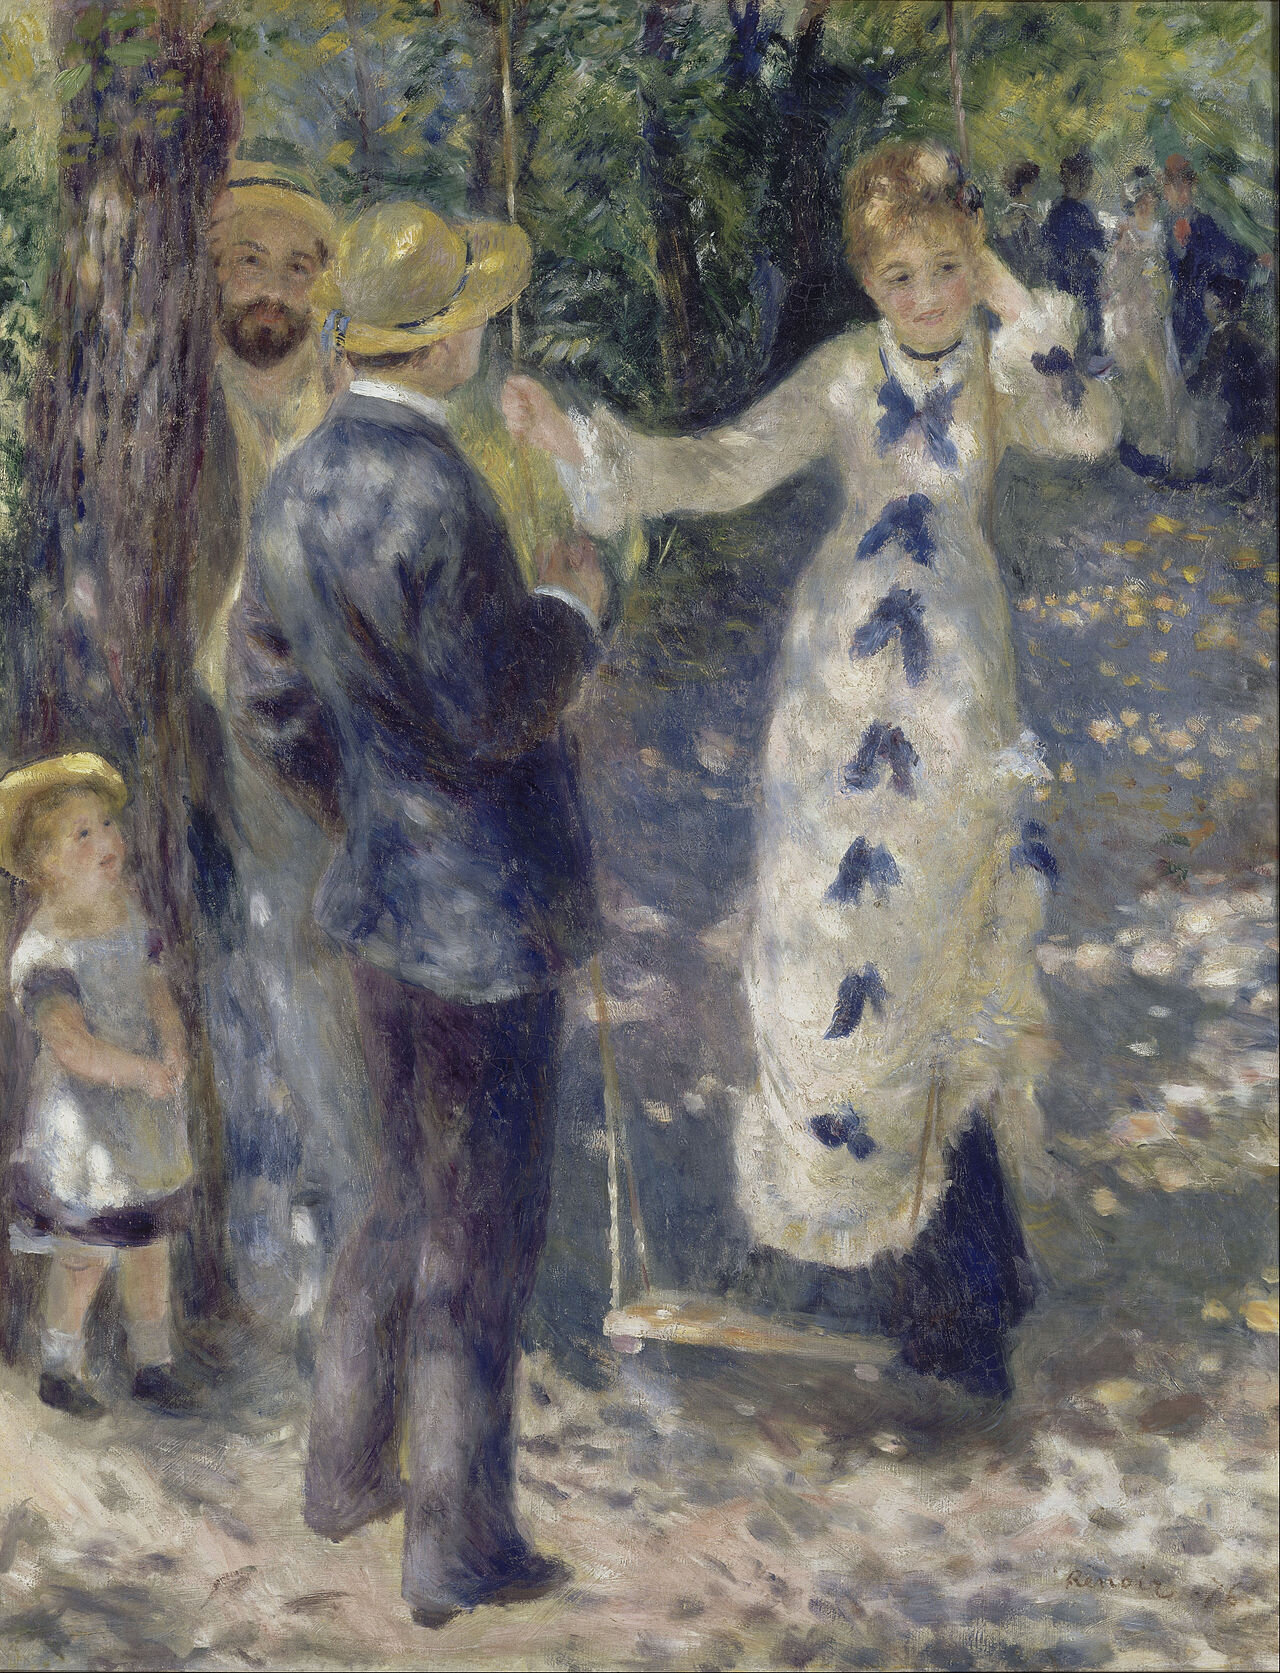 Pierre Auguste Renoir, The Swing, 1876